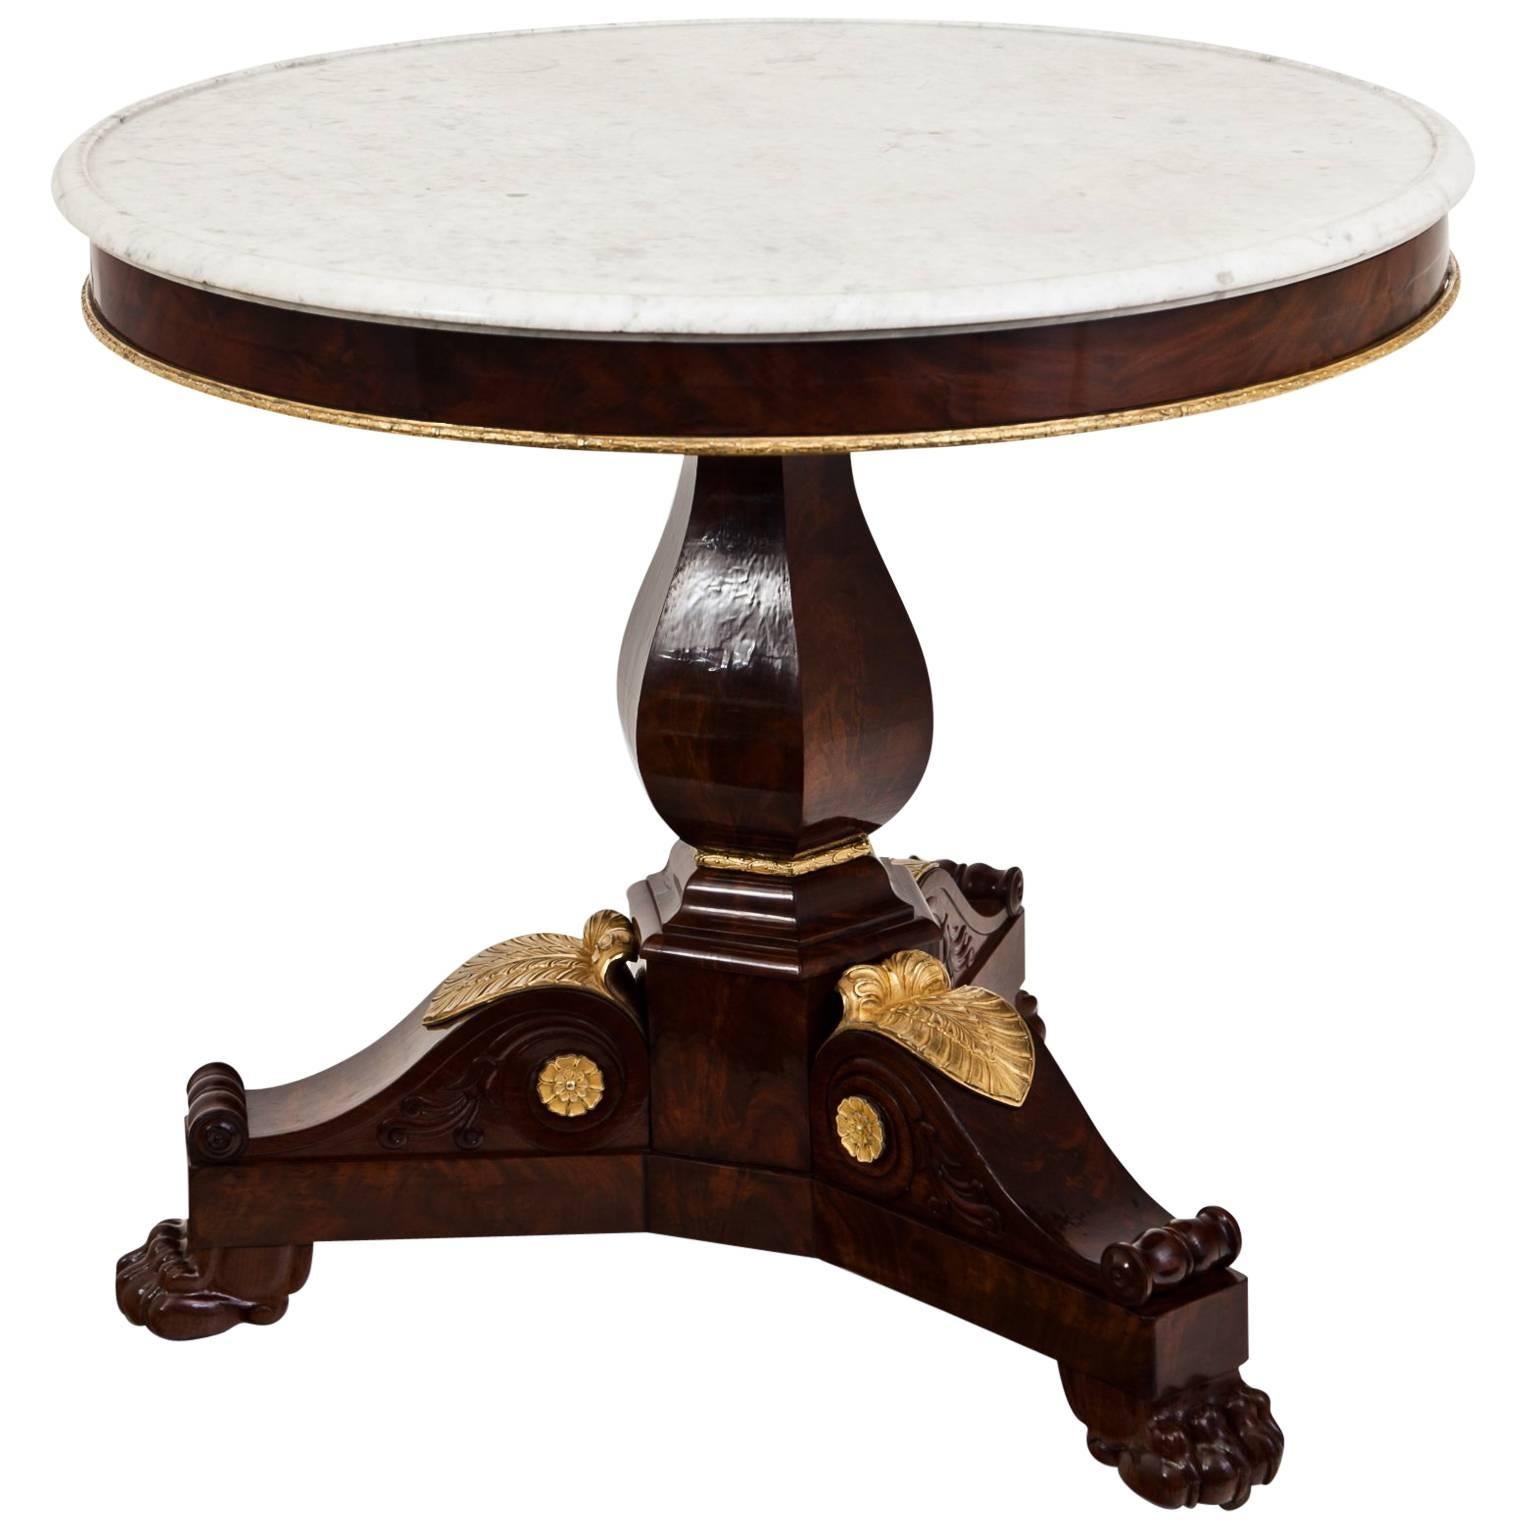 Charles X Salon Table, circa 1820